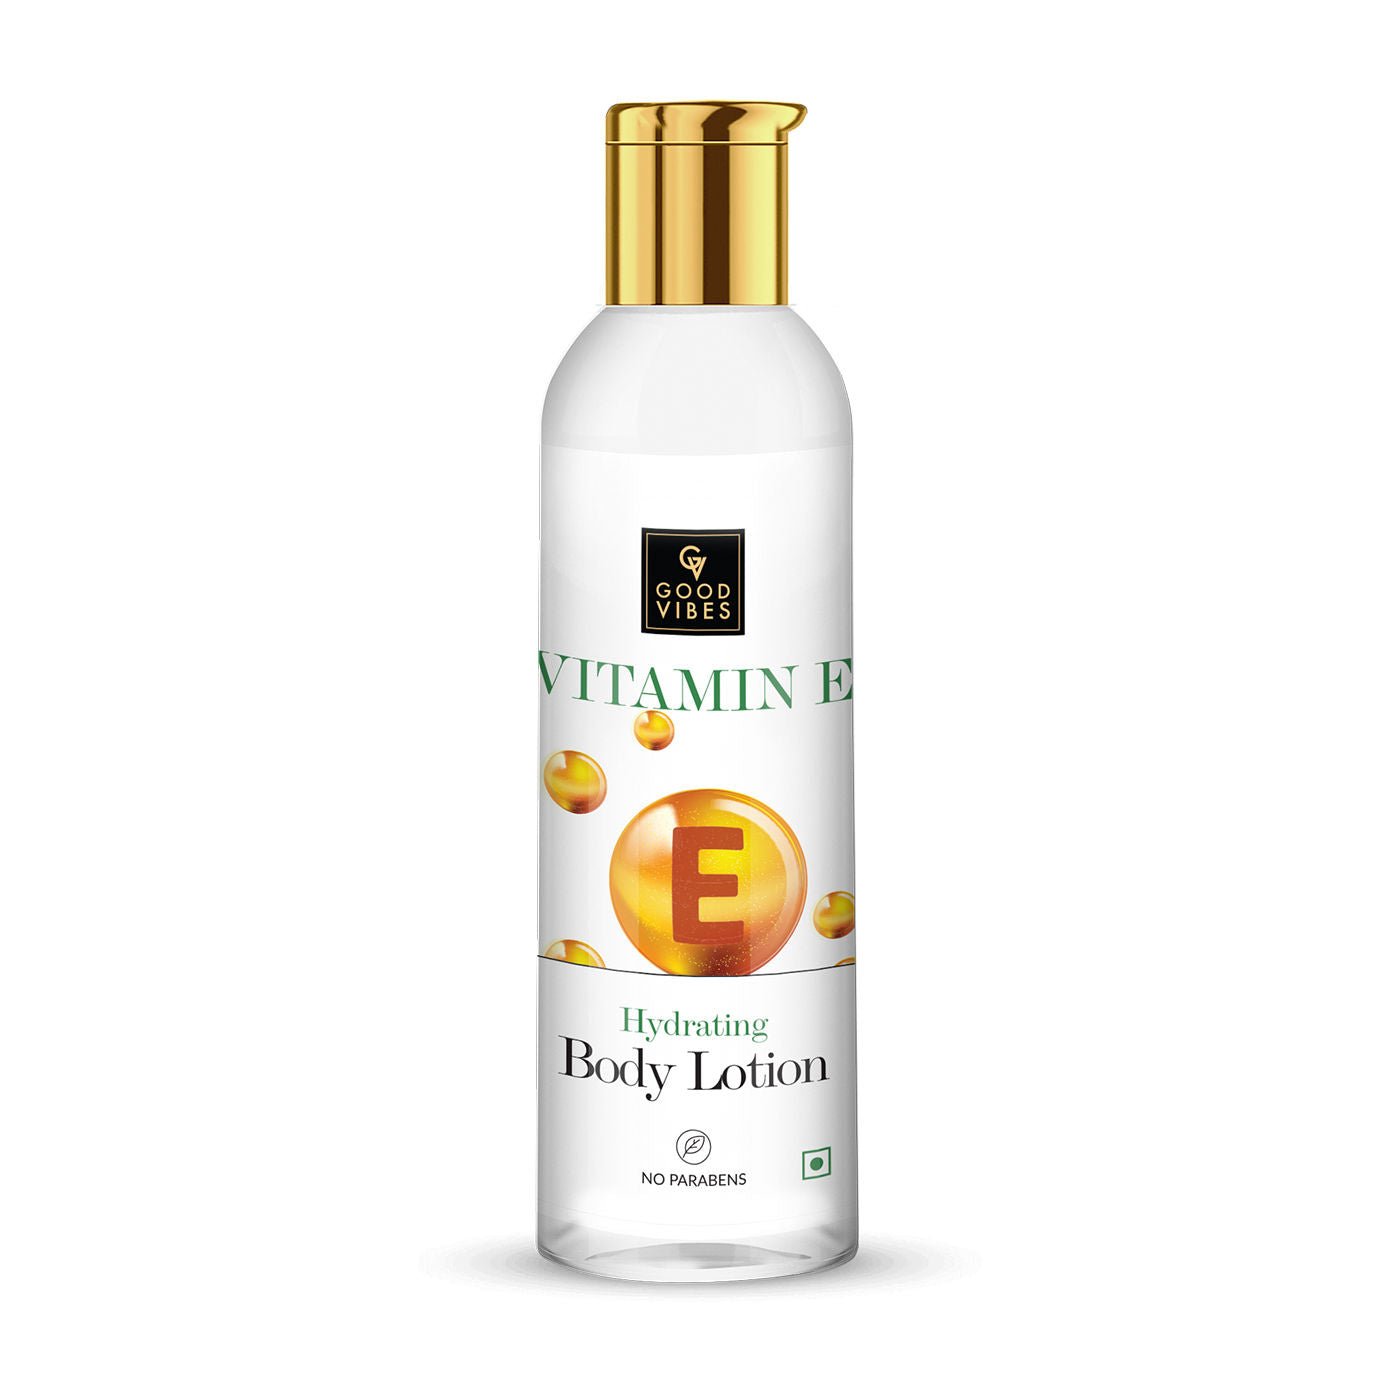 good-vibes-hydrating-body-lotion-vitamin-e-200-ml-2-18-19-8